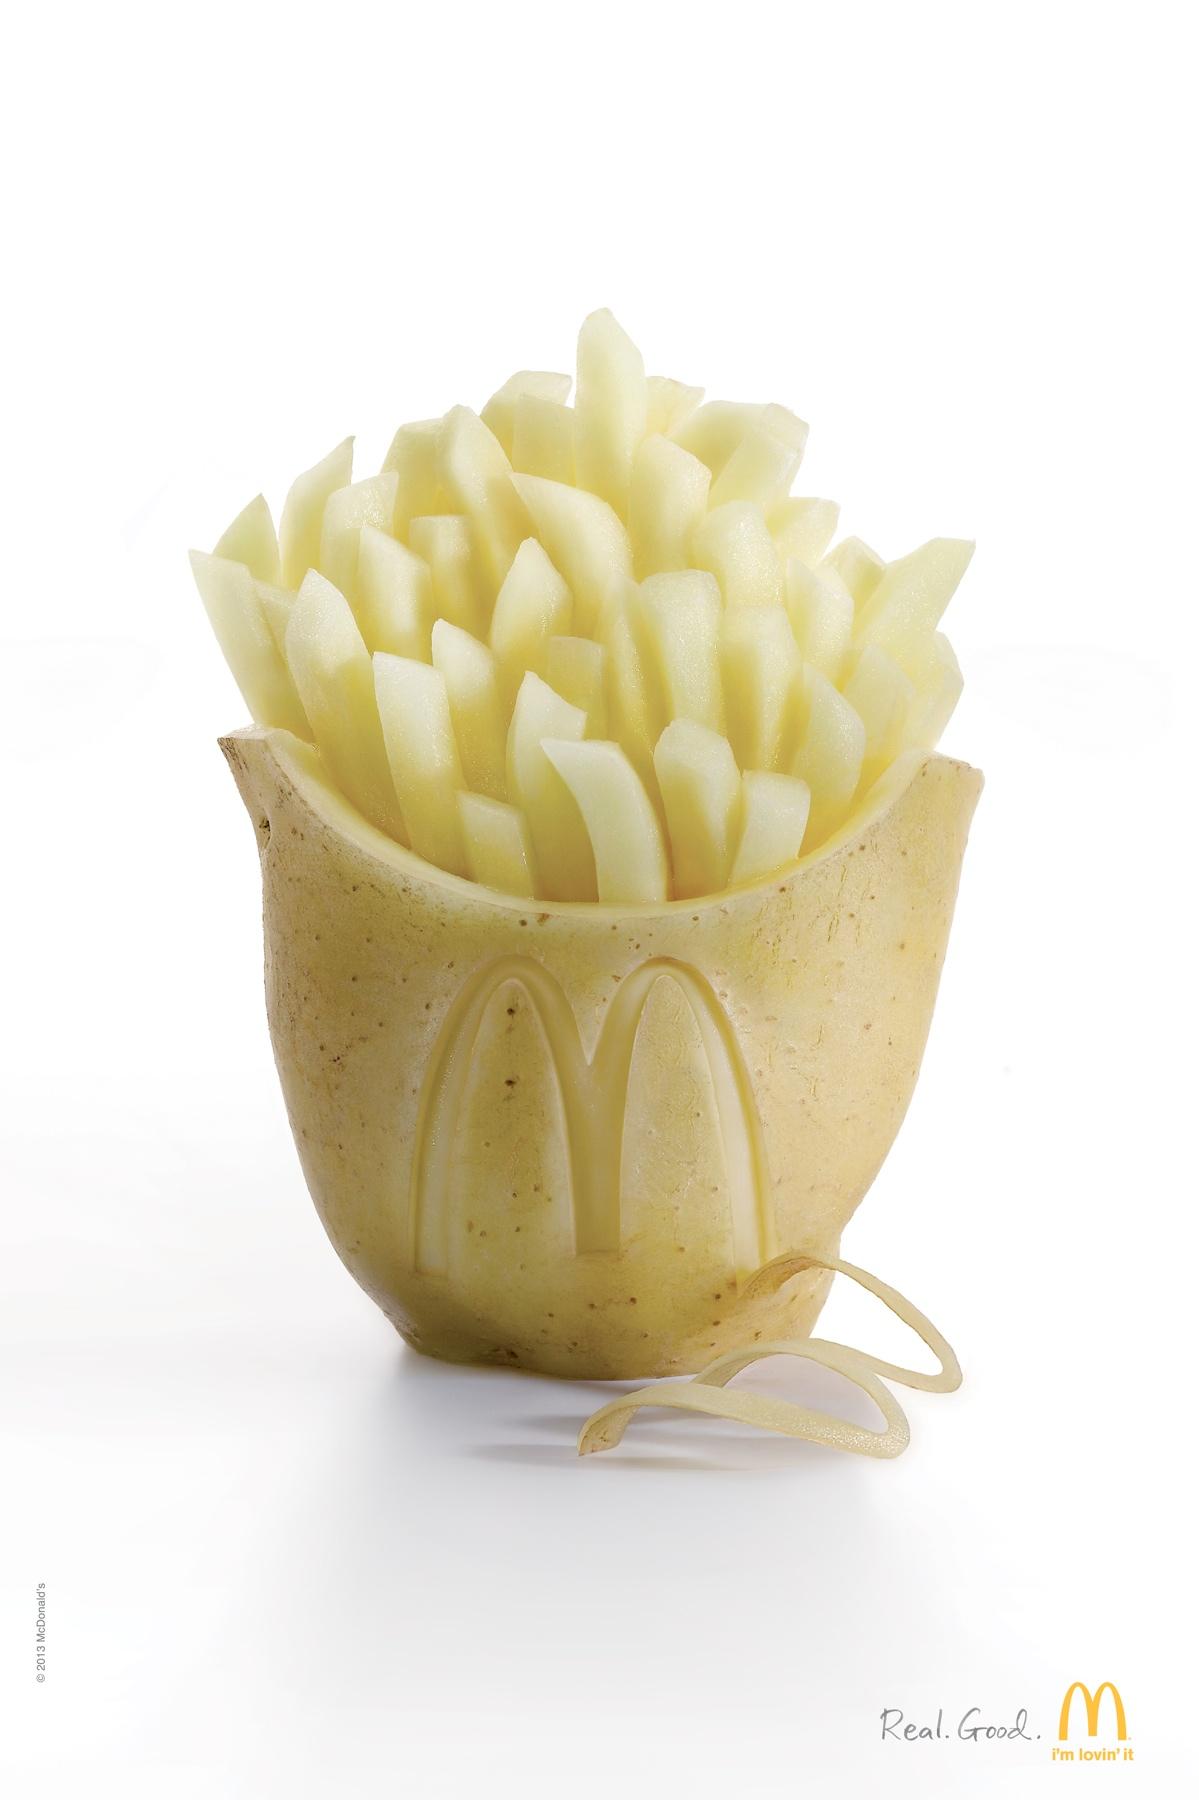 mcdonald's potato ad